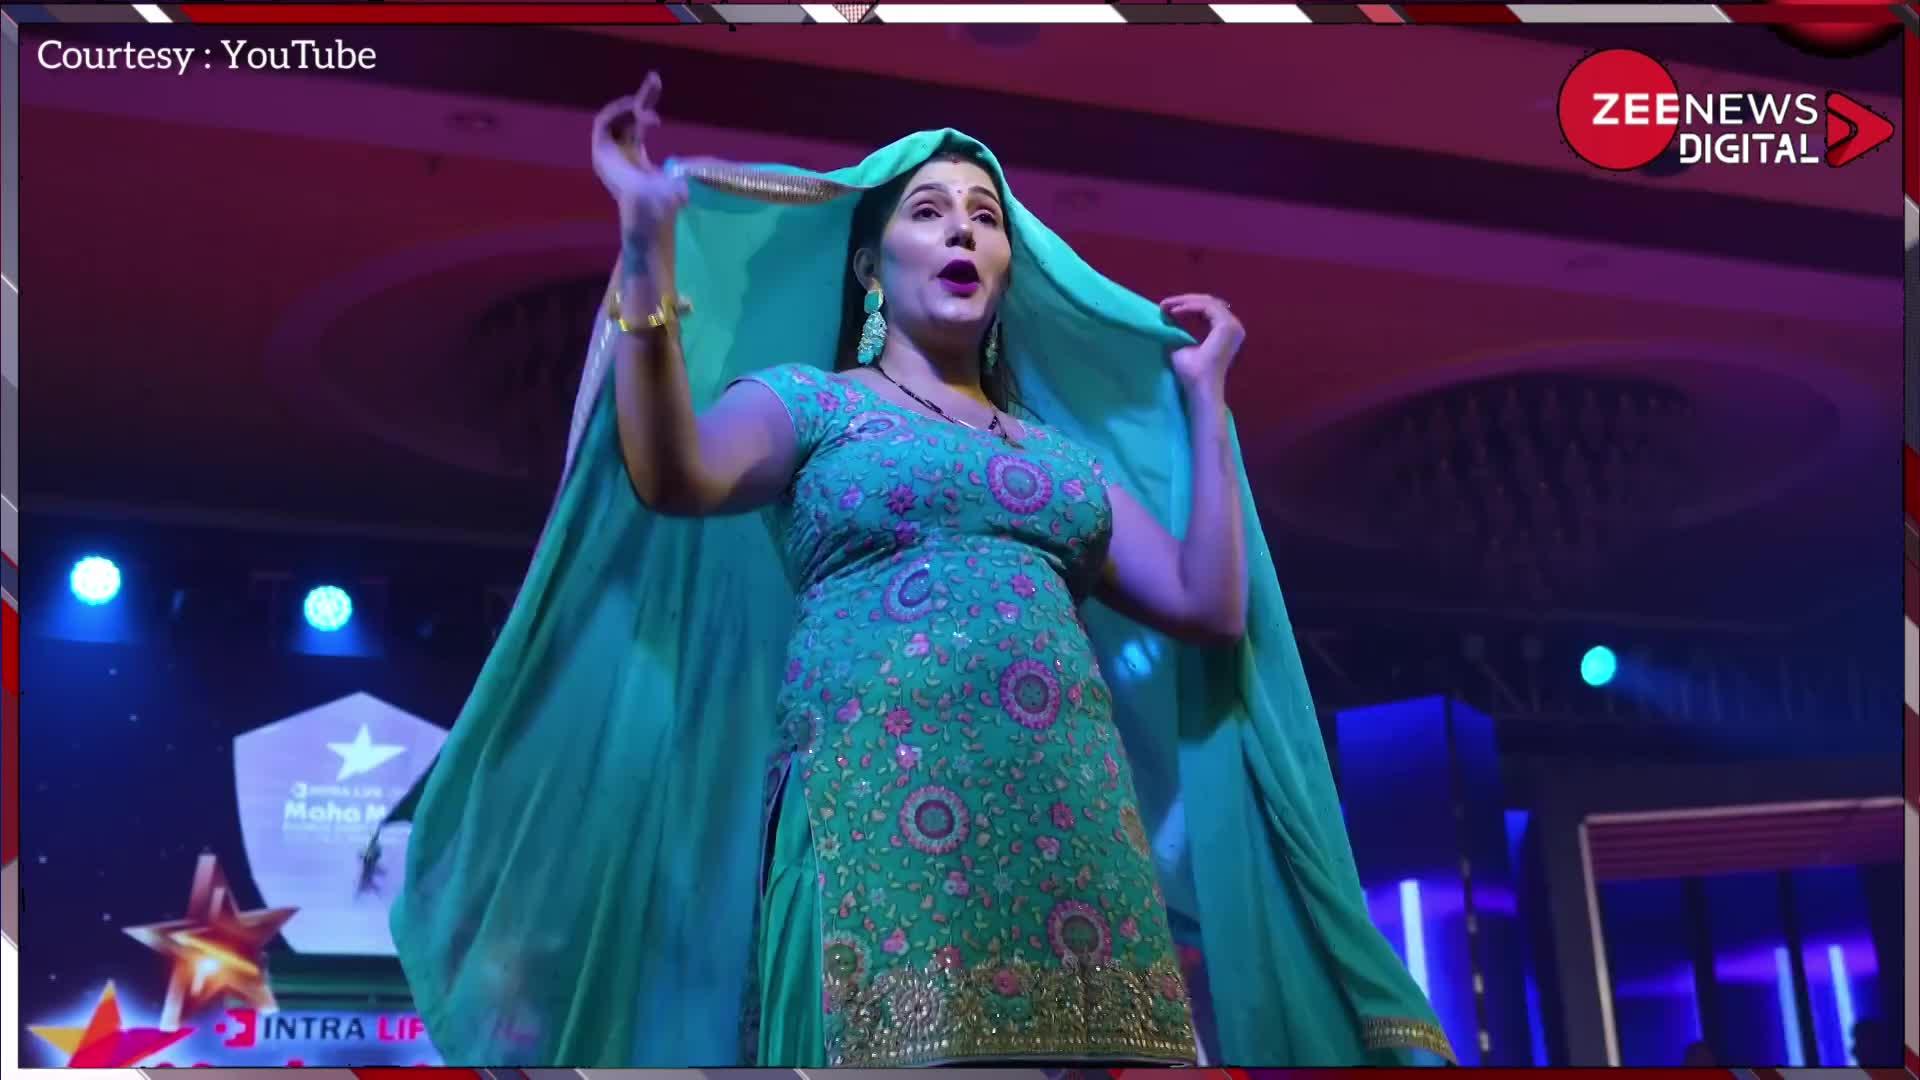 Haryanvi Dancer Sapna Choudhary Dances On Stage Looking Superhot In